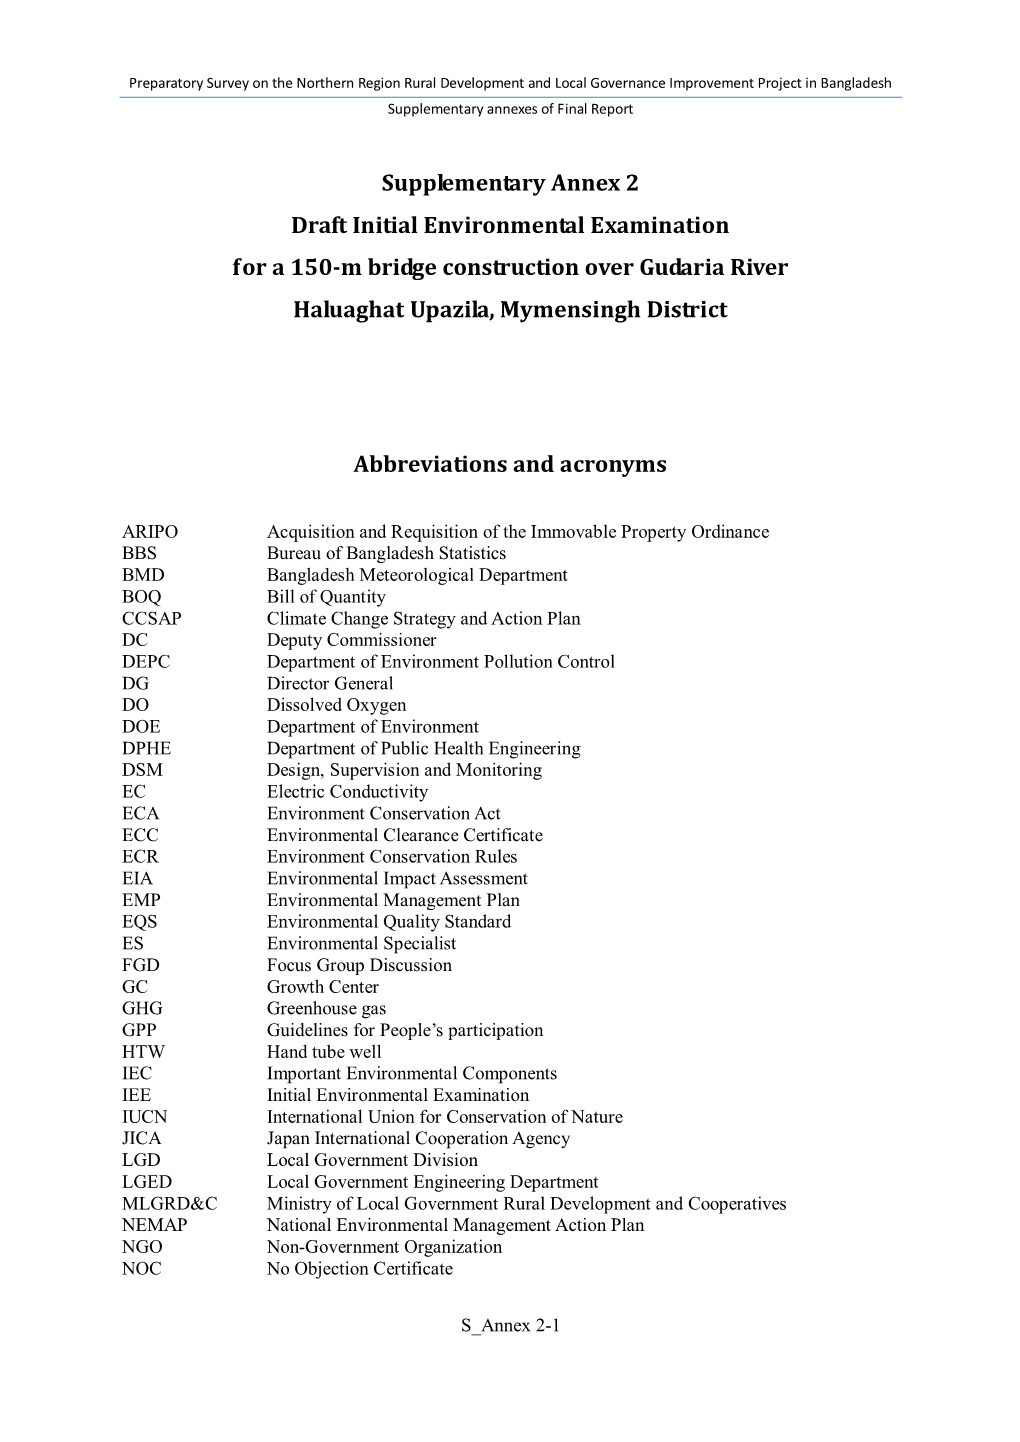 Supplementary Annex 2 Draft Initial Environmental Examination for a 150-M Bridge Construction Over Gudaria River Haluaghat Upazi